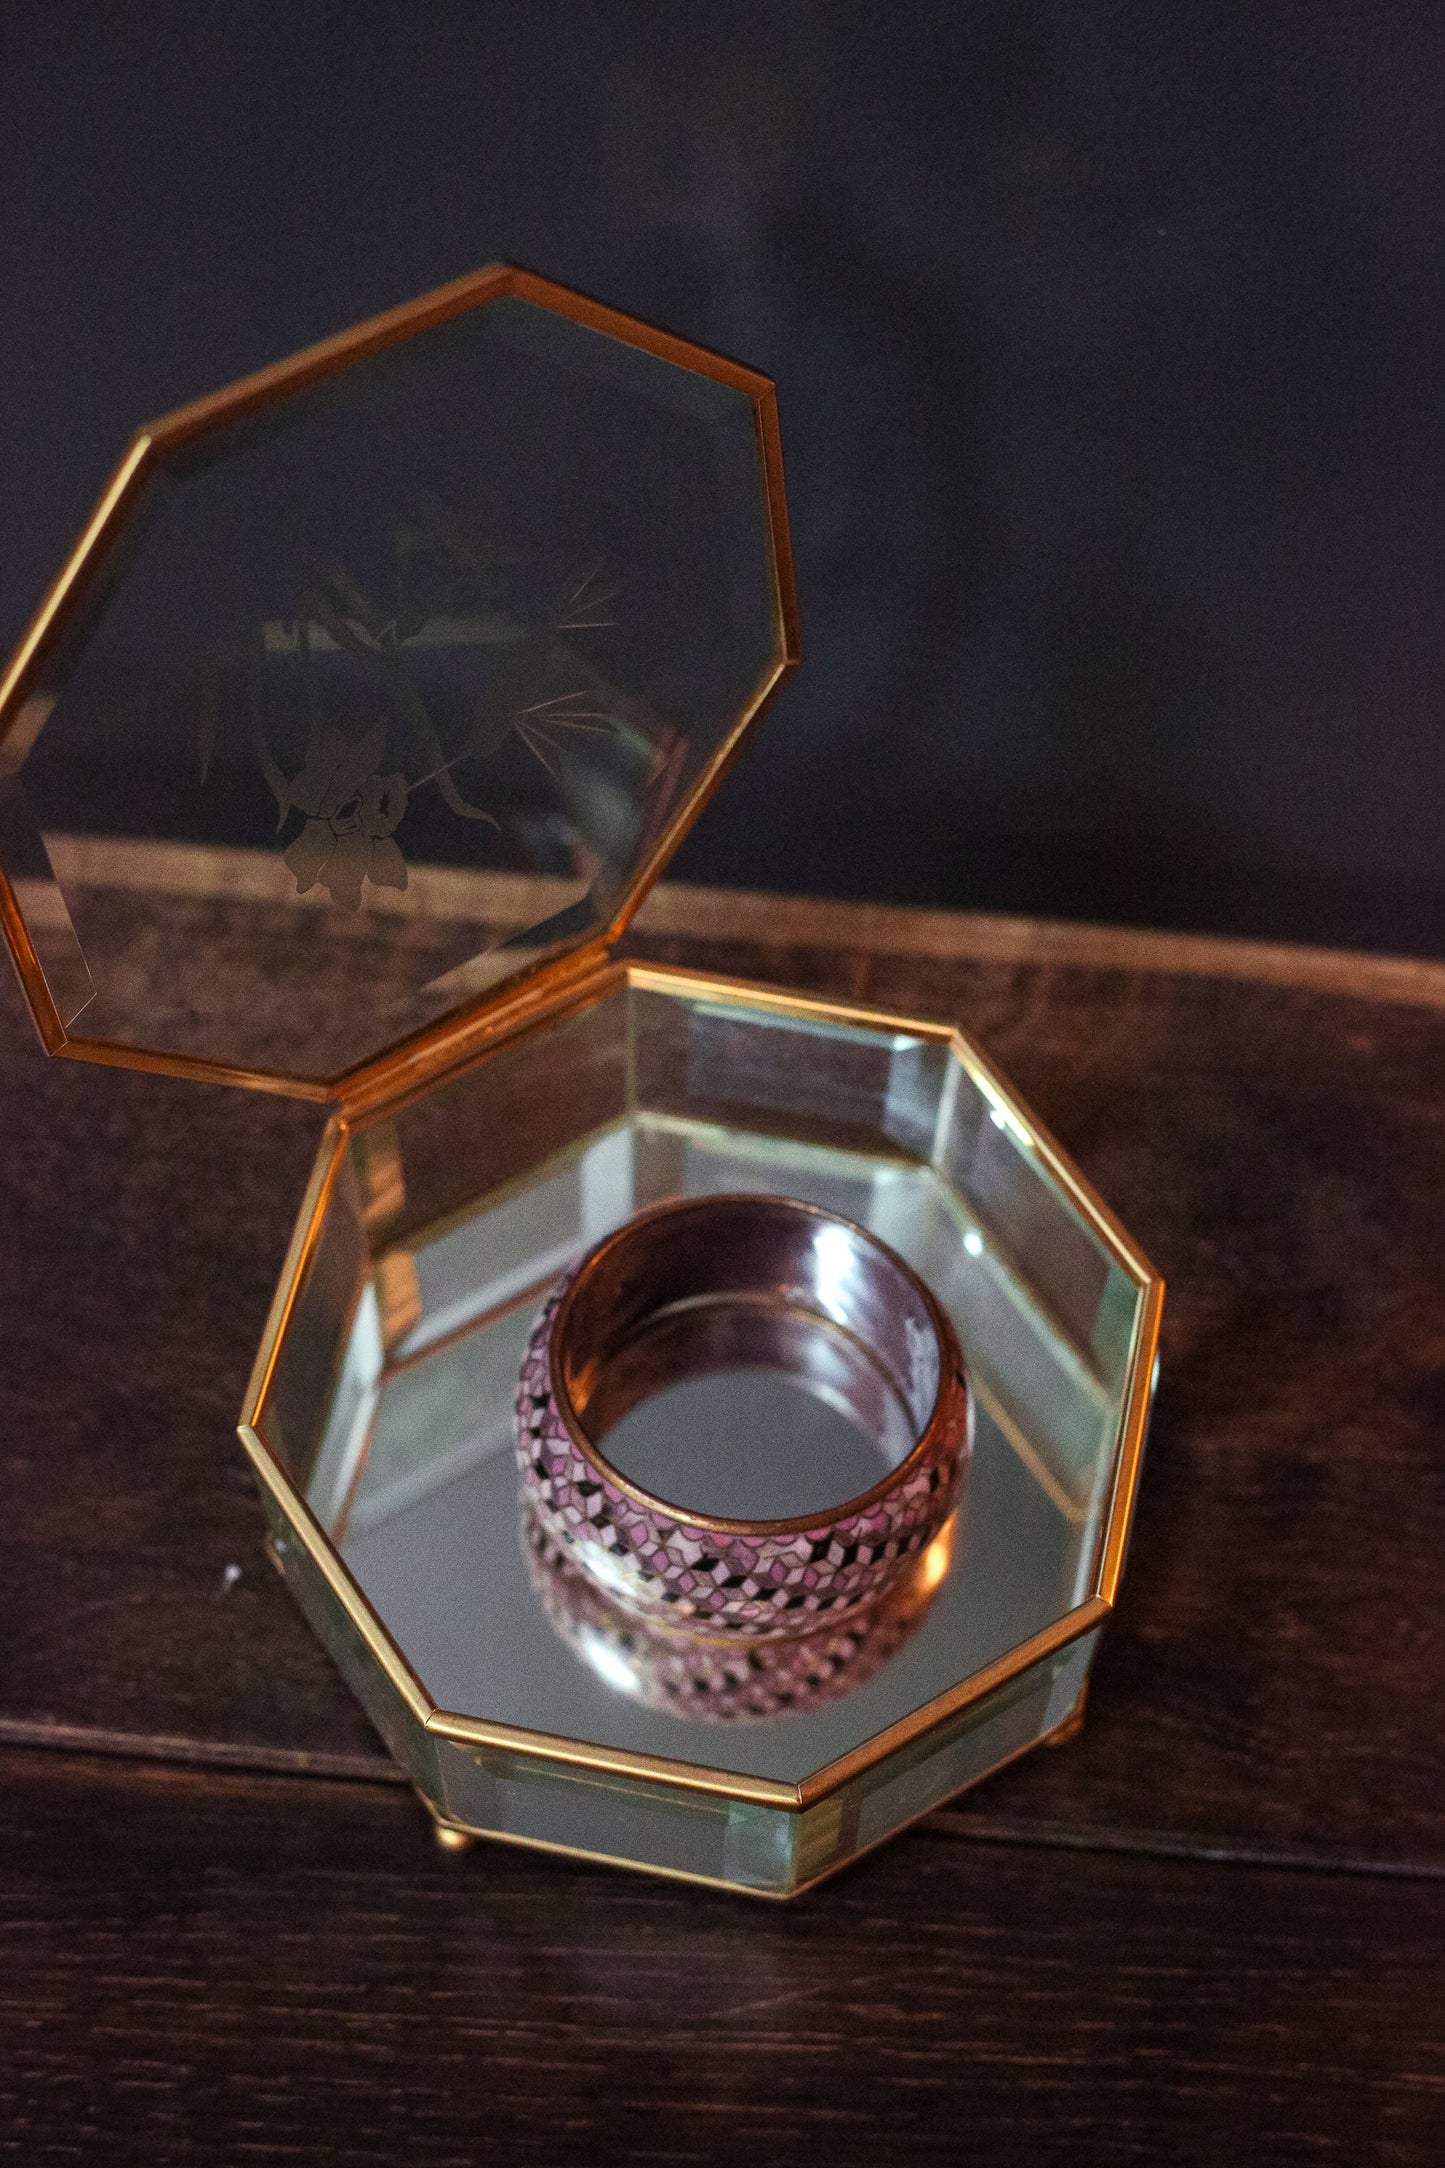 Vintage Cloisonne Geometric Patterned Bangle Brass Enamel Bracelet - Purple/Mauve/Pink Enameled Brass Wrist Cuff Collectible Jewelry